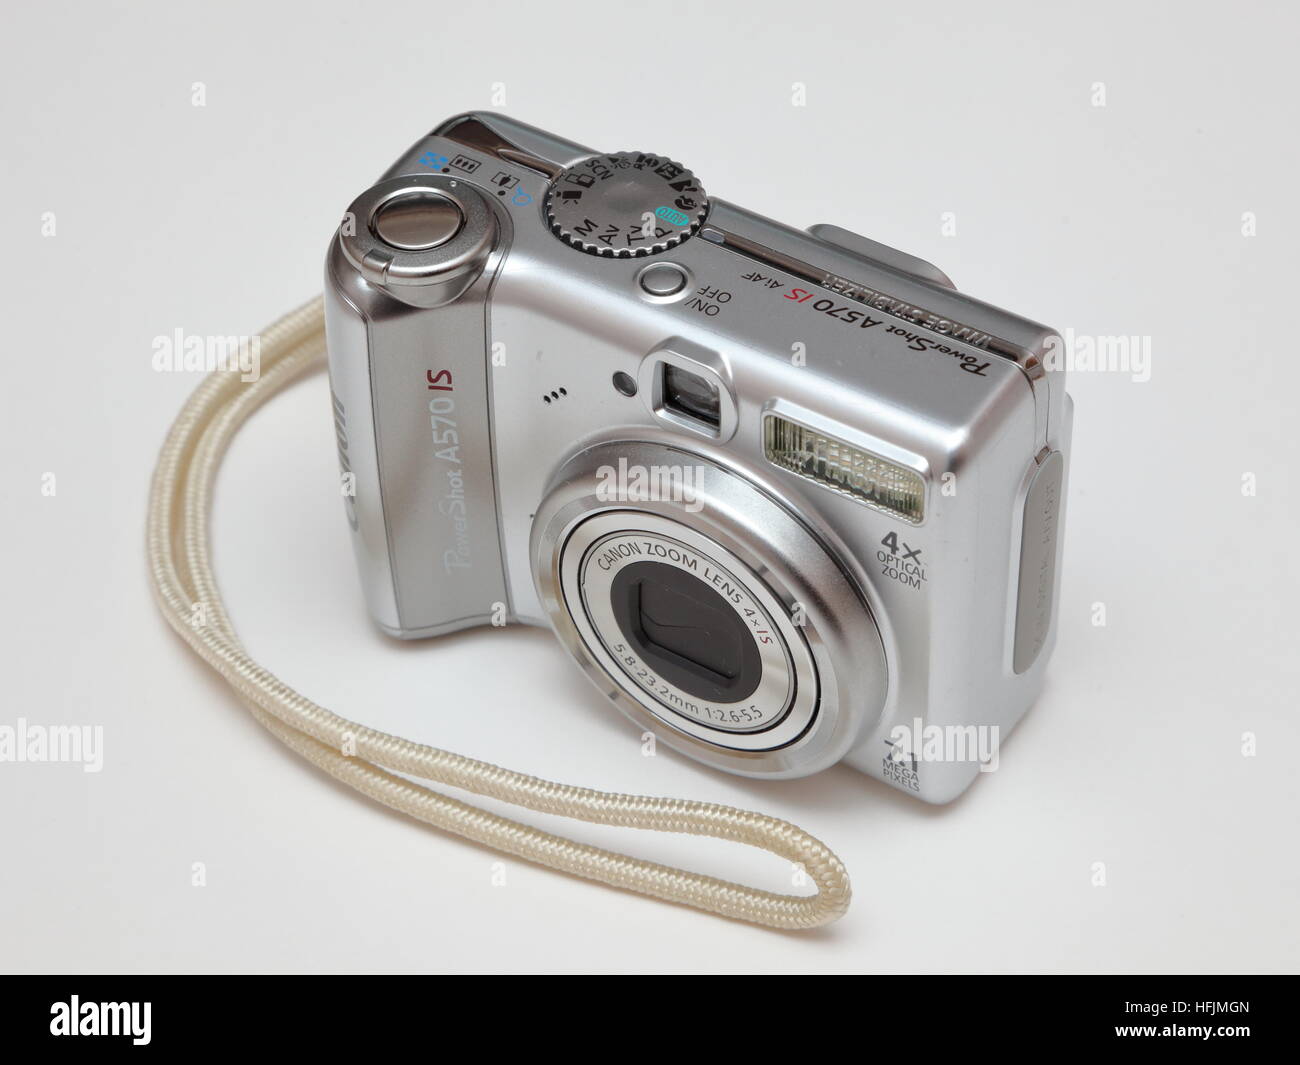 Canon PowerShot A570 - 7.1 Mpx Digital compact camera Stock Photo